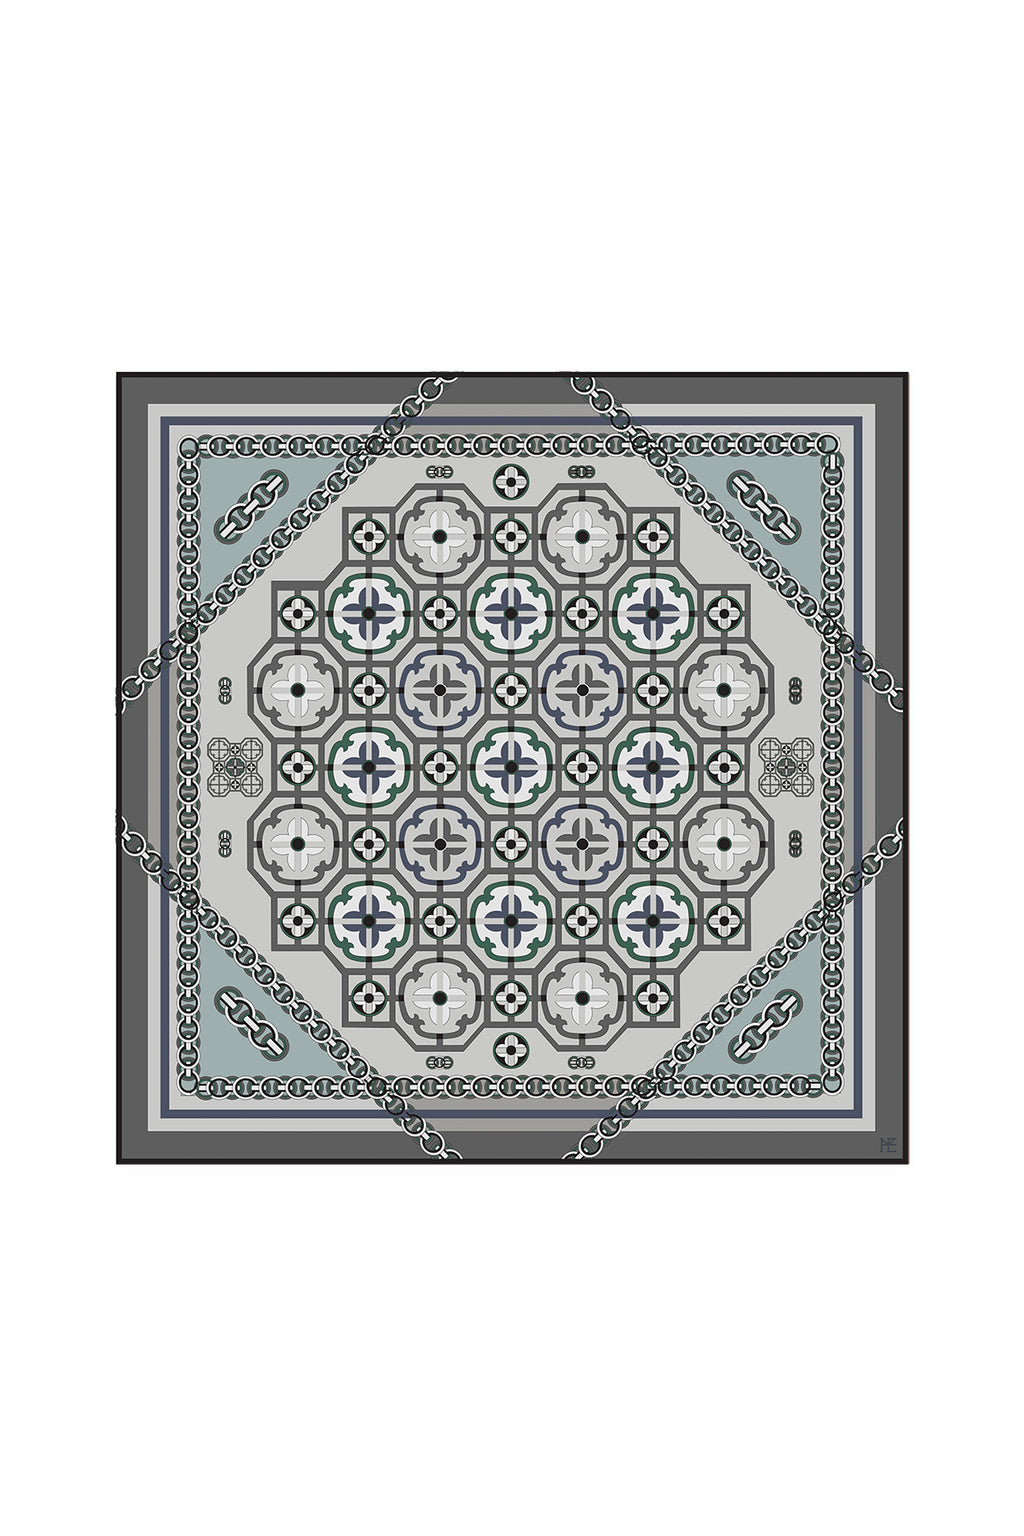 Cintamani pattern 110 - Gray